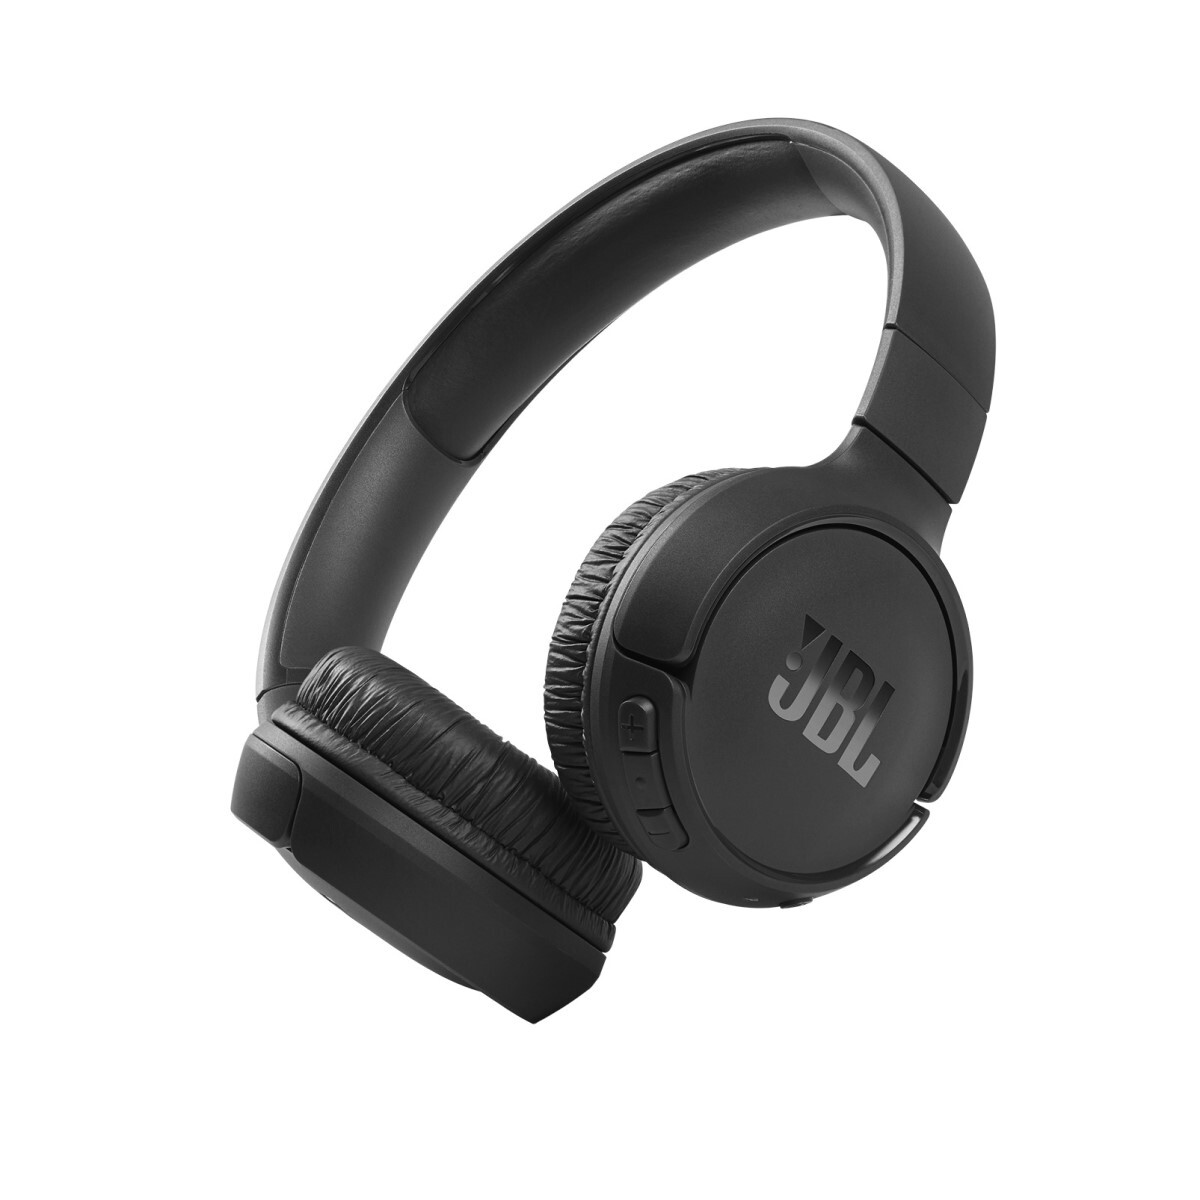 Jbl t510 auricular on-ear bluetooth - Negro 